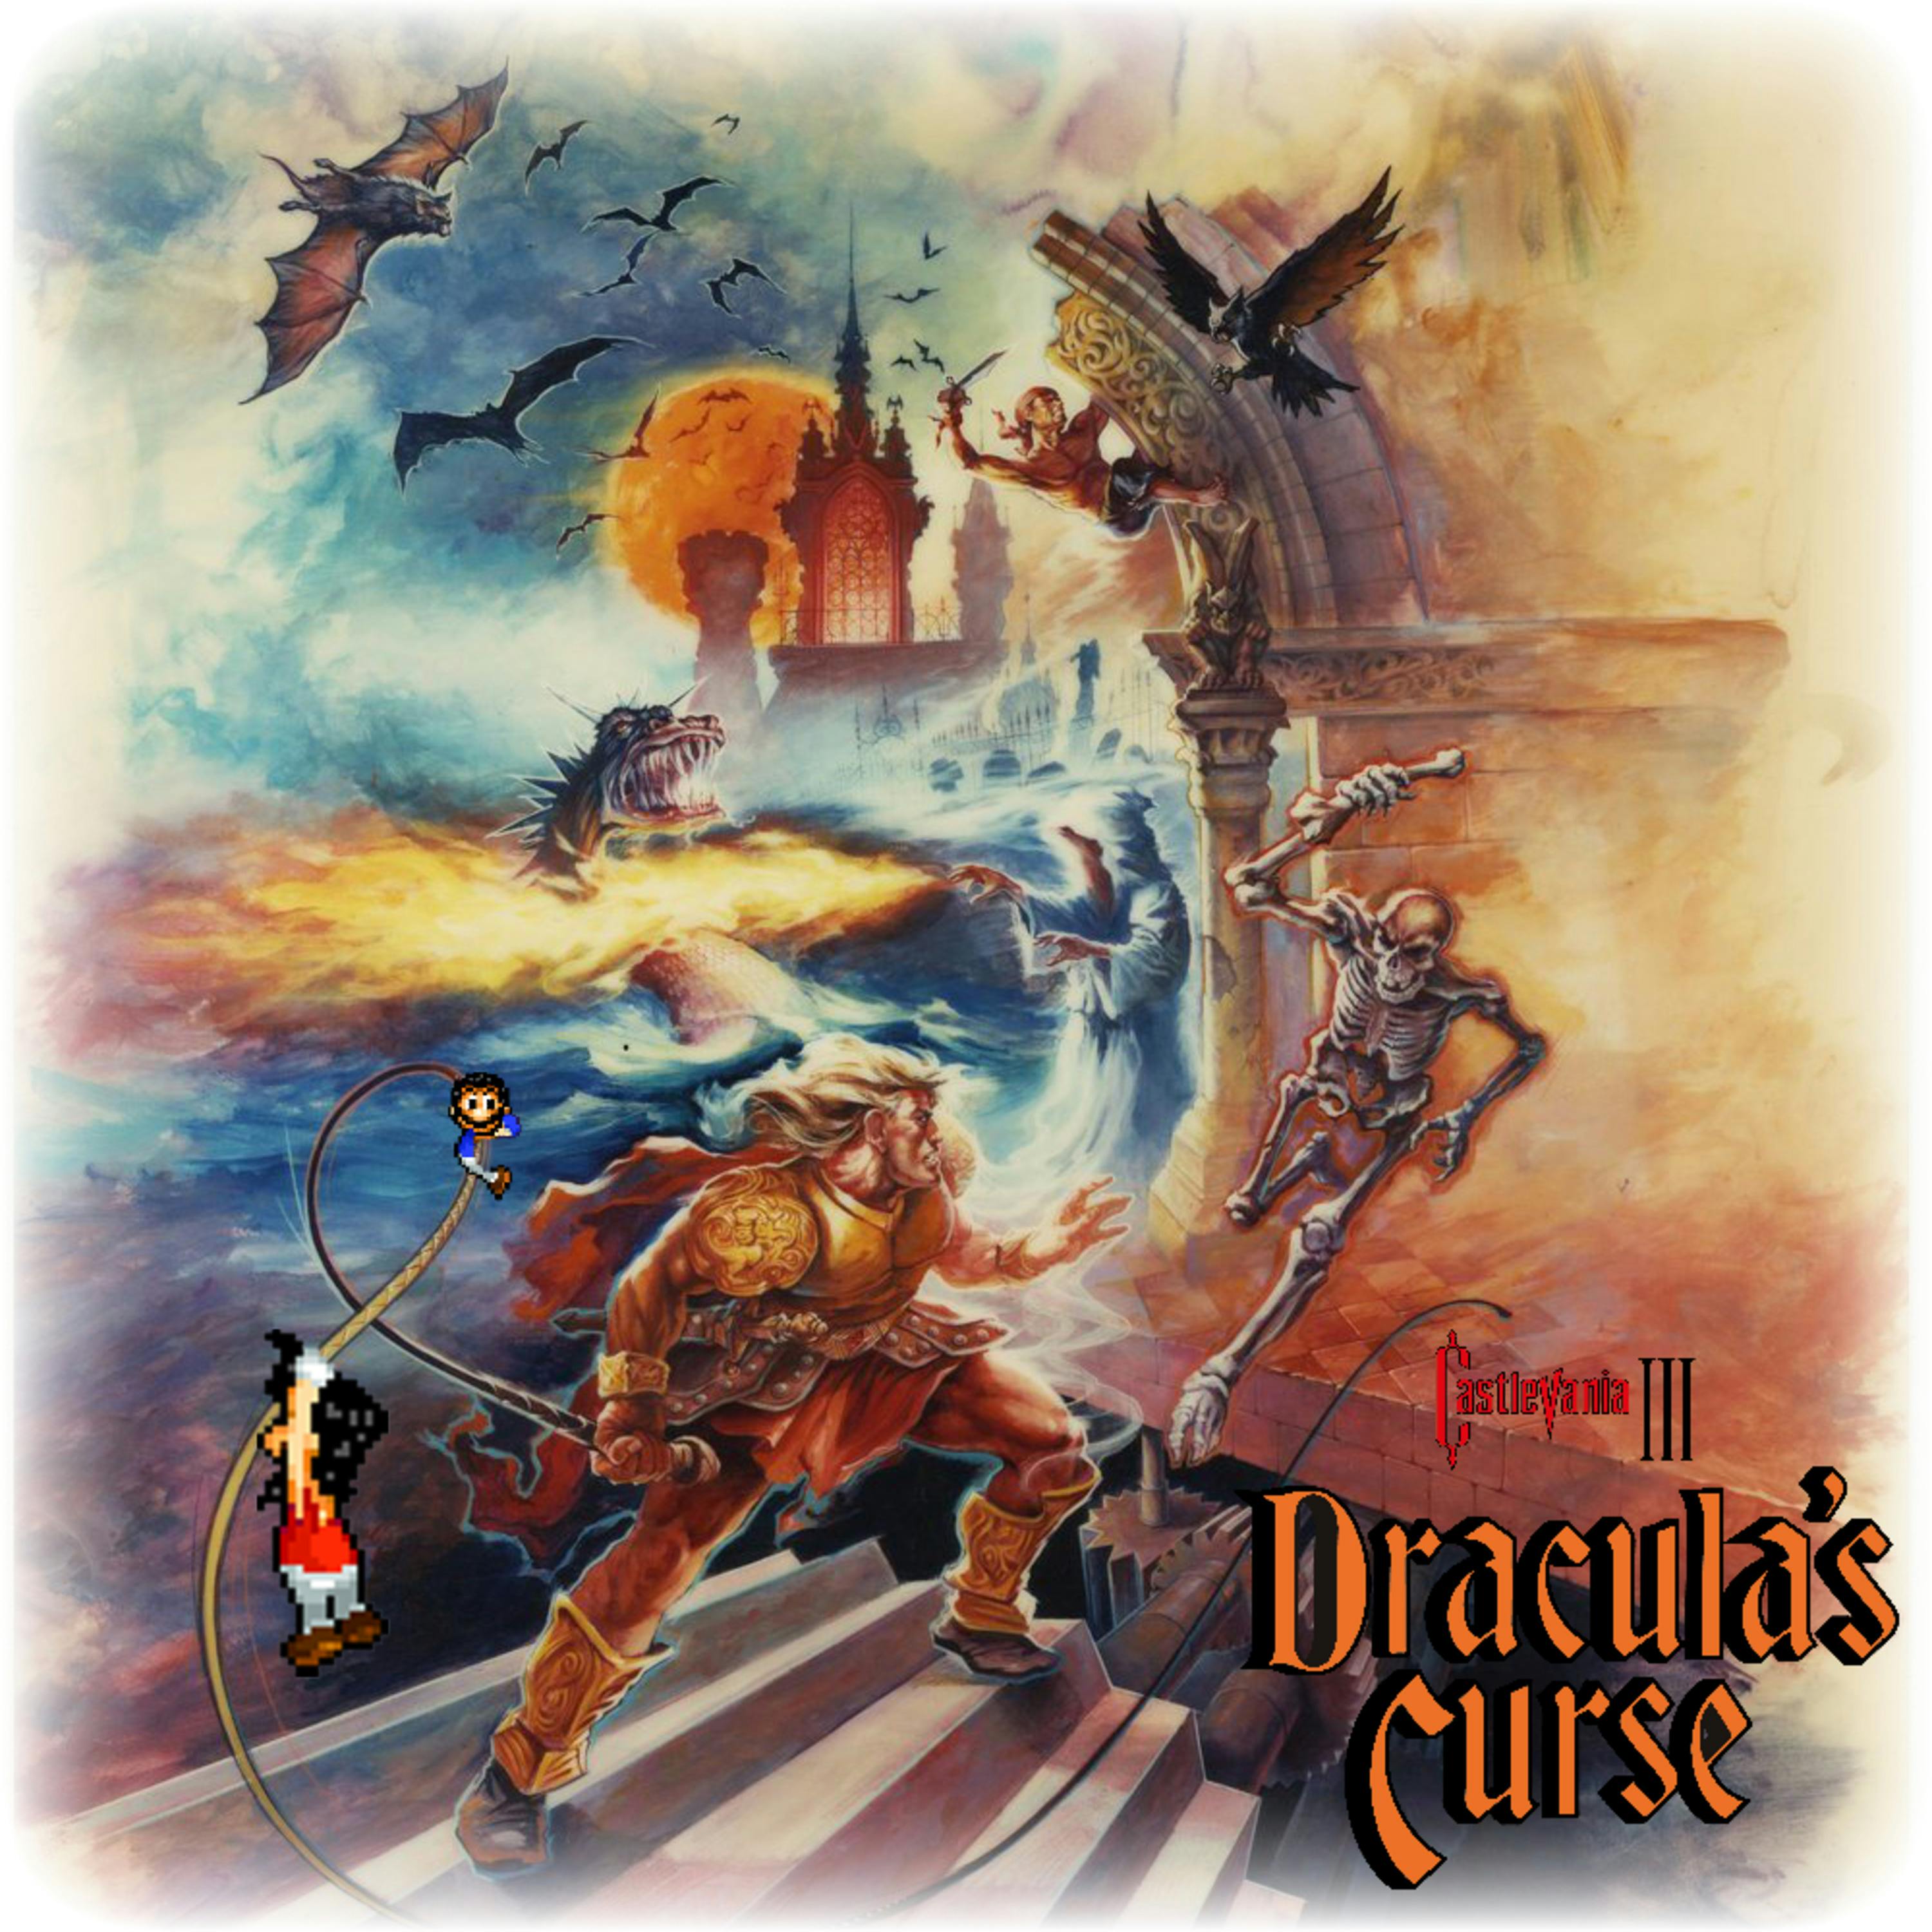 209 - Castlevania III: Dracula's Curse